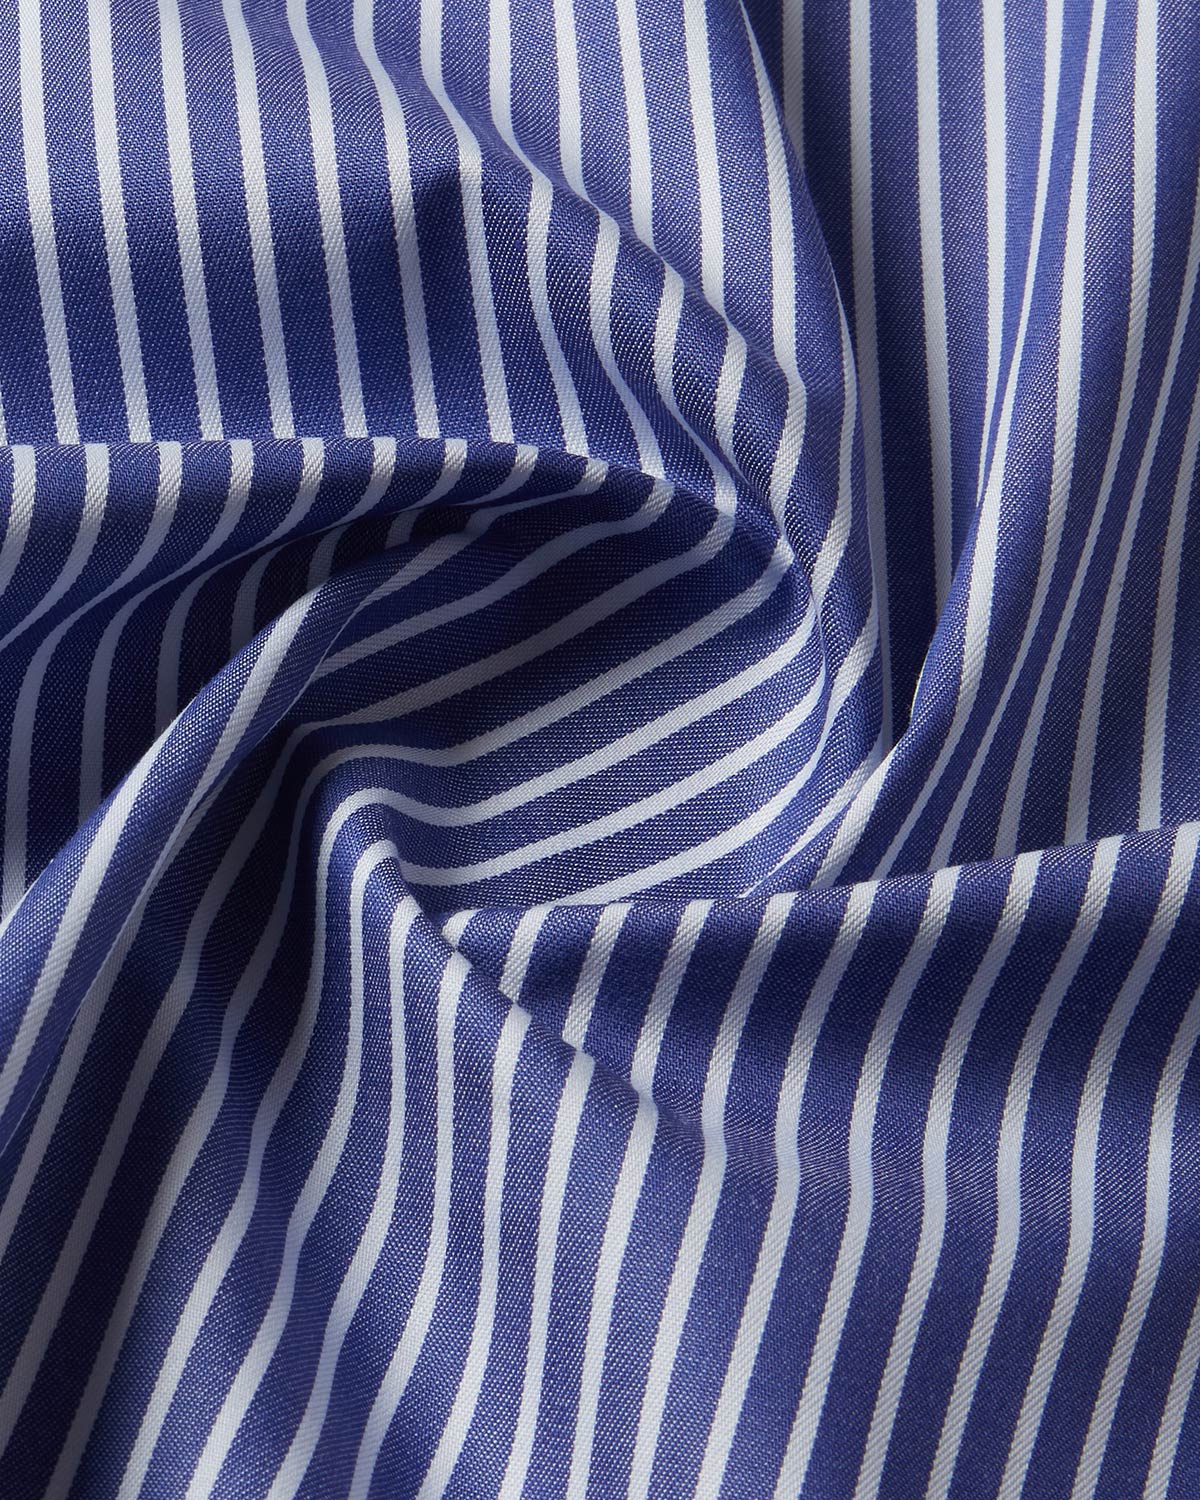 Bombay Shirt Company - Naval Club Striped Shirt